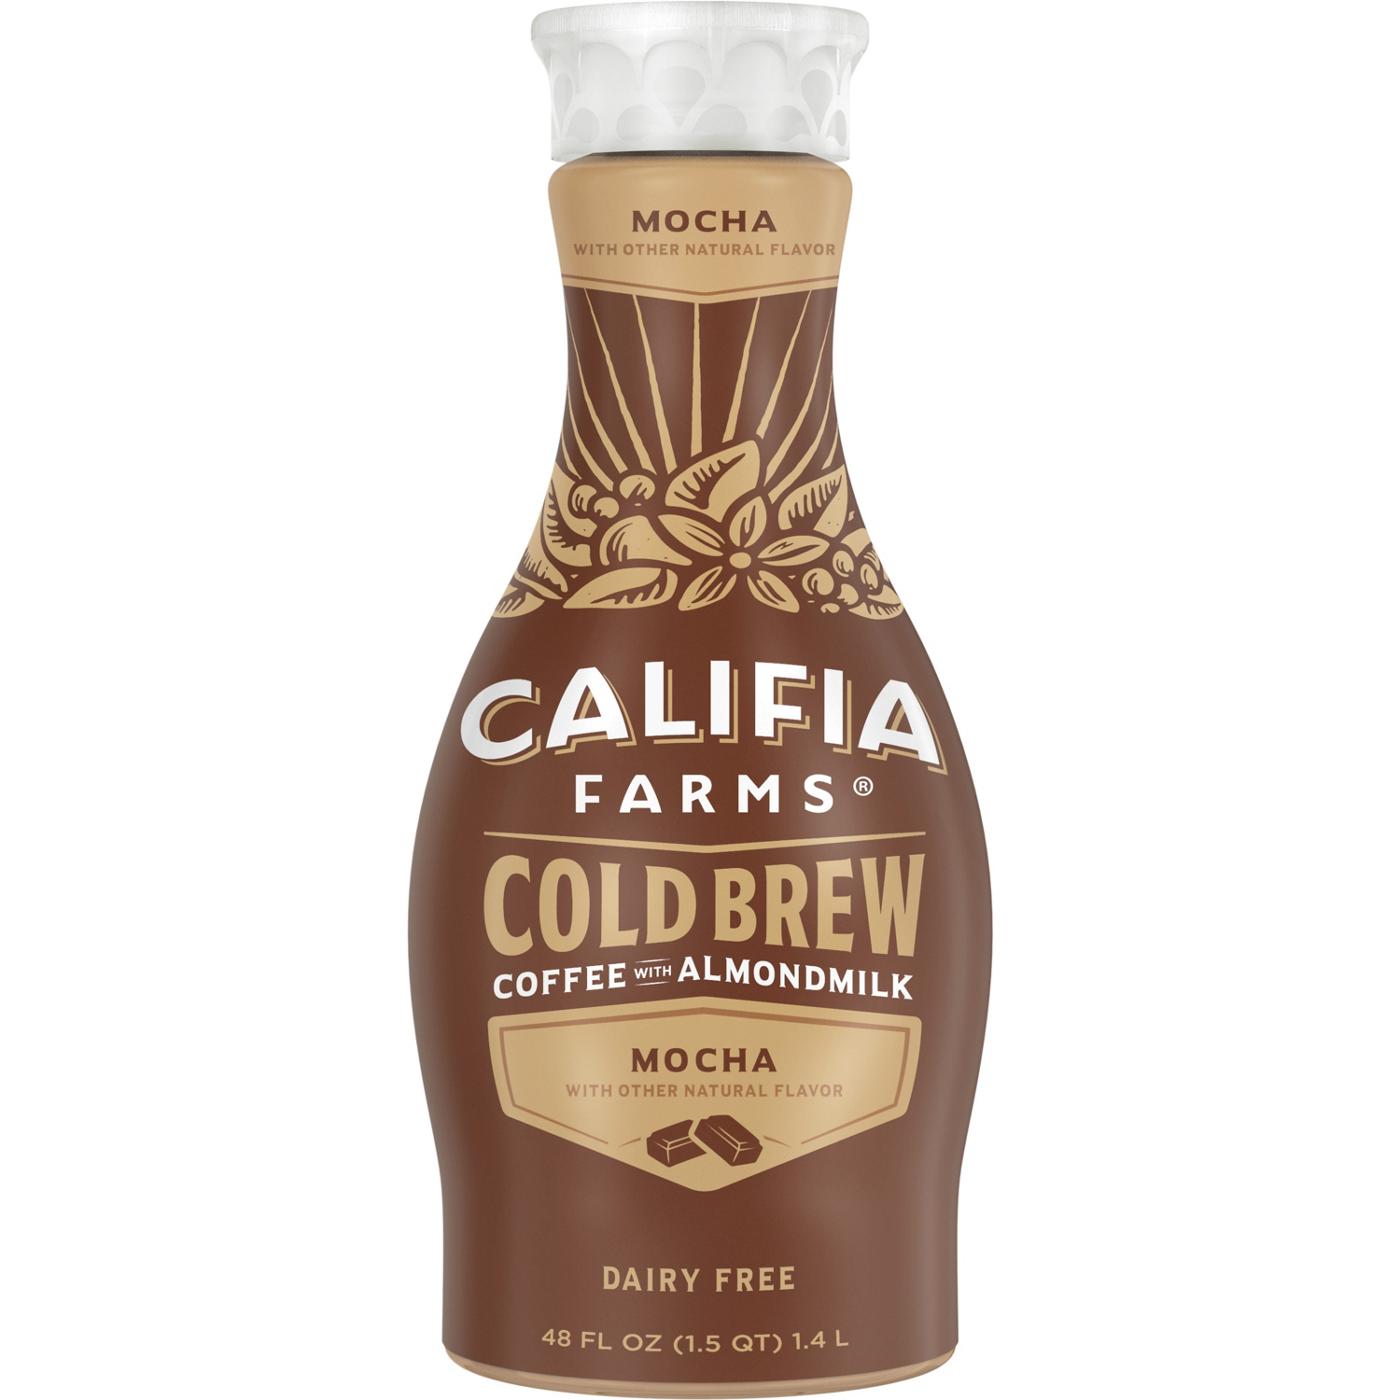 Califia Farms Mocha Cold Brew Coffee; image 1 of 2